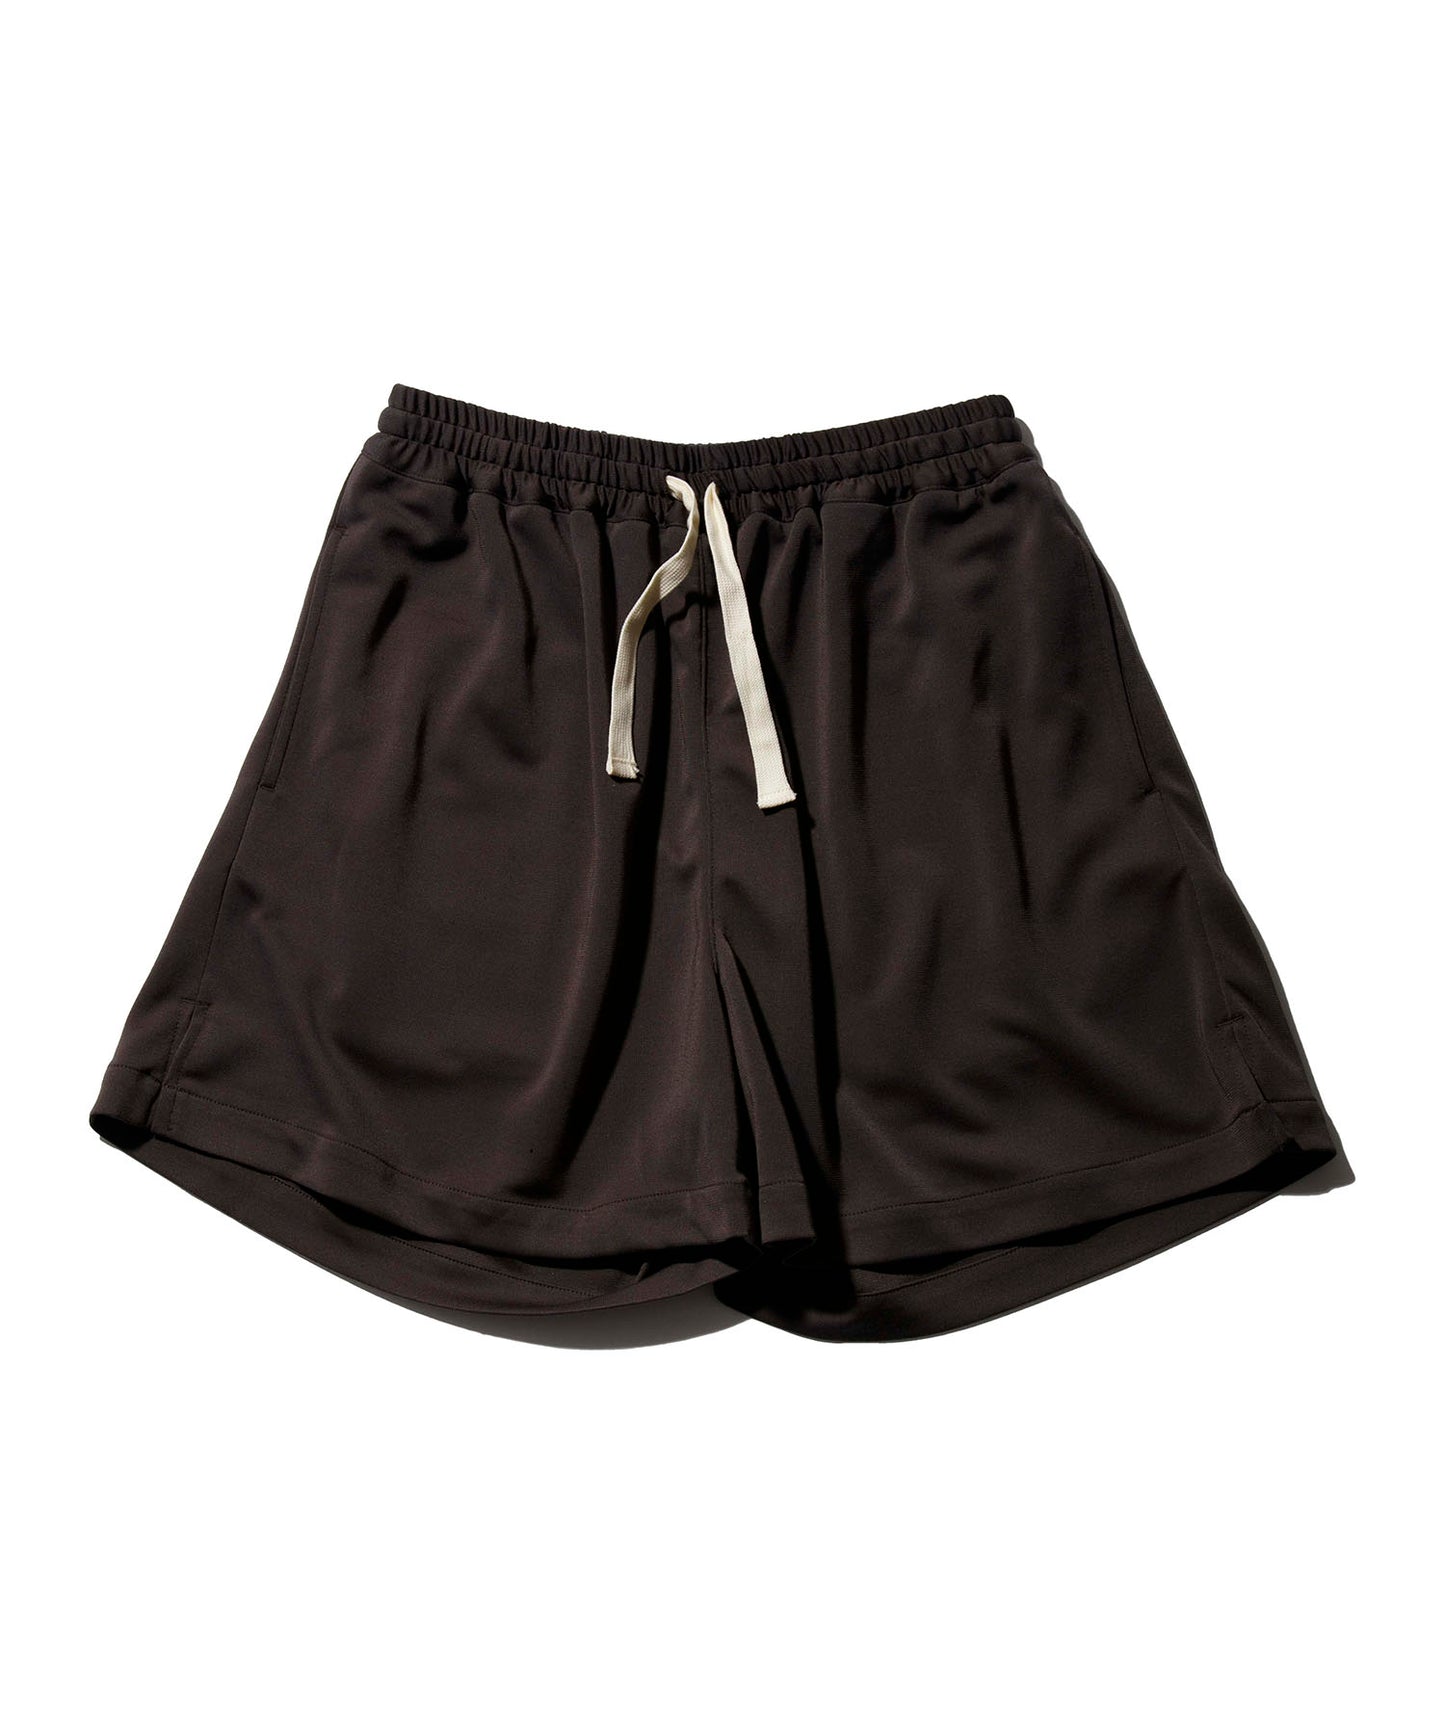 Tricot Boxer Shorts